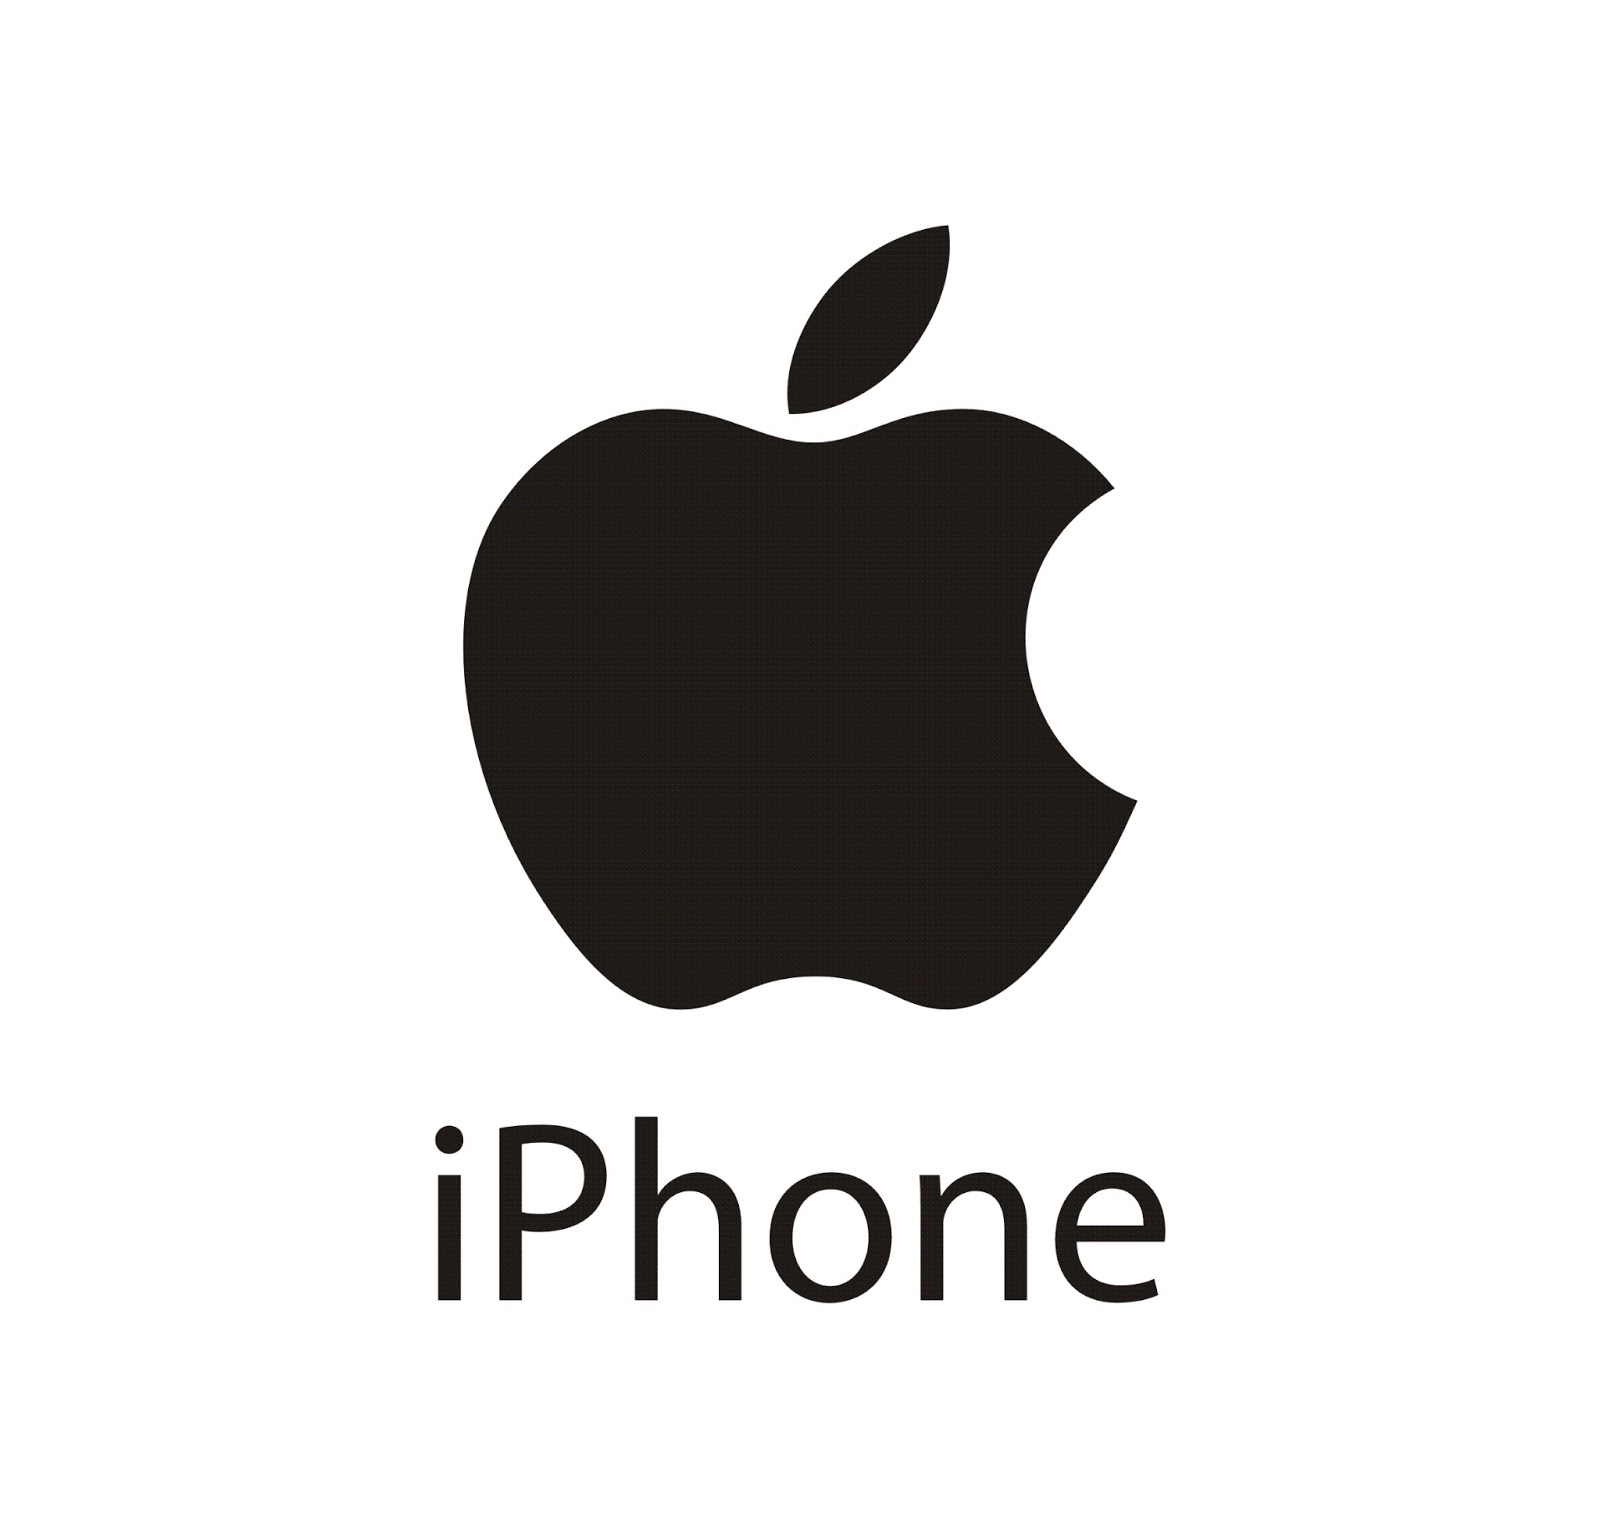 Apple iPhone - серия смартфонов